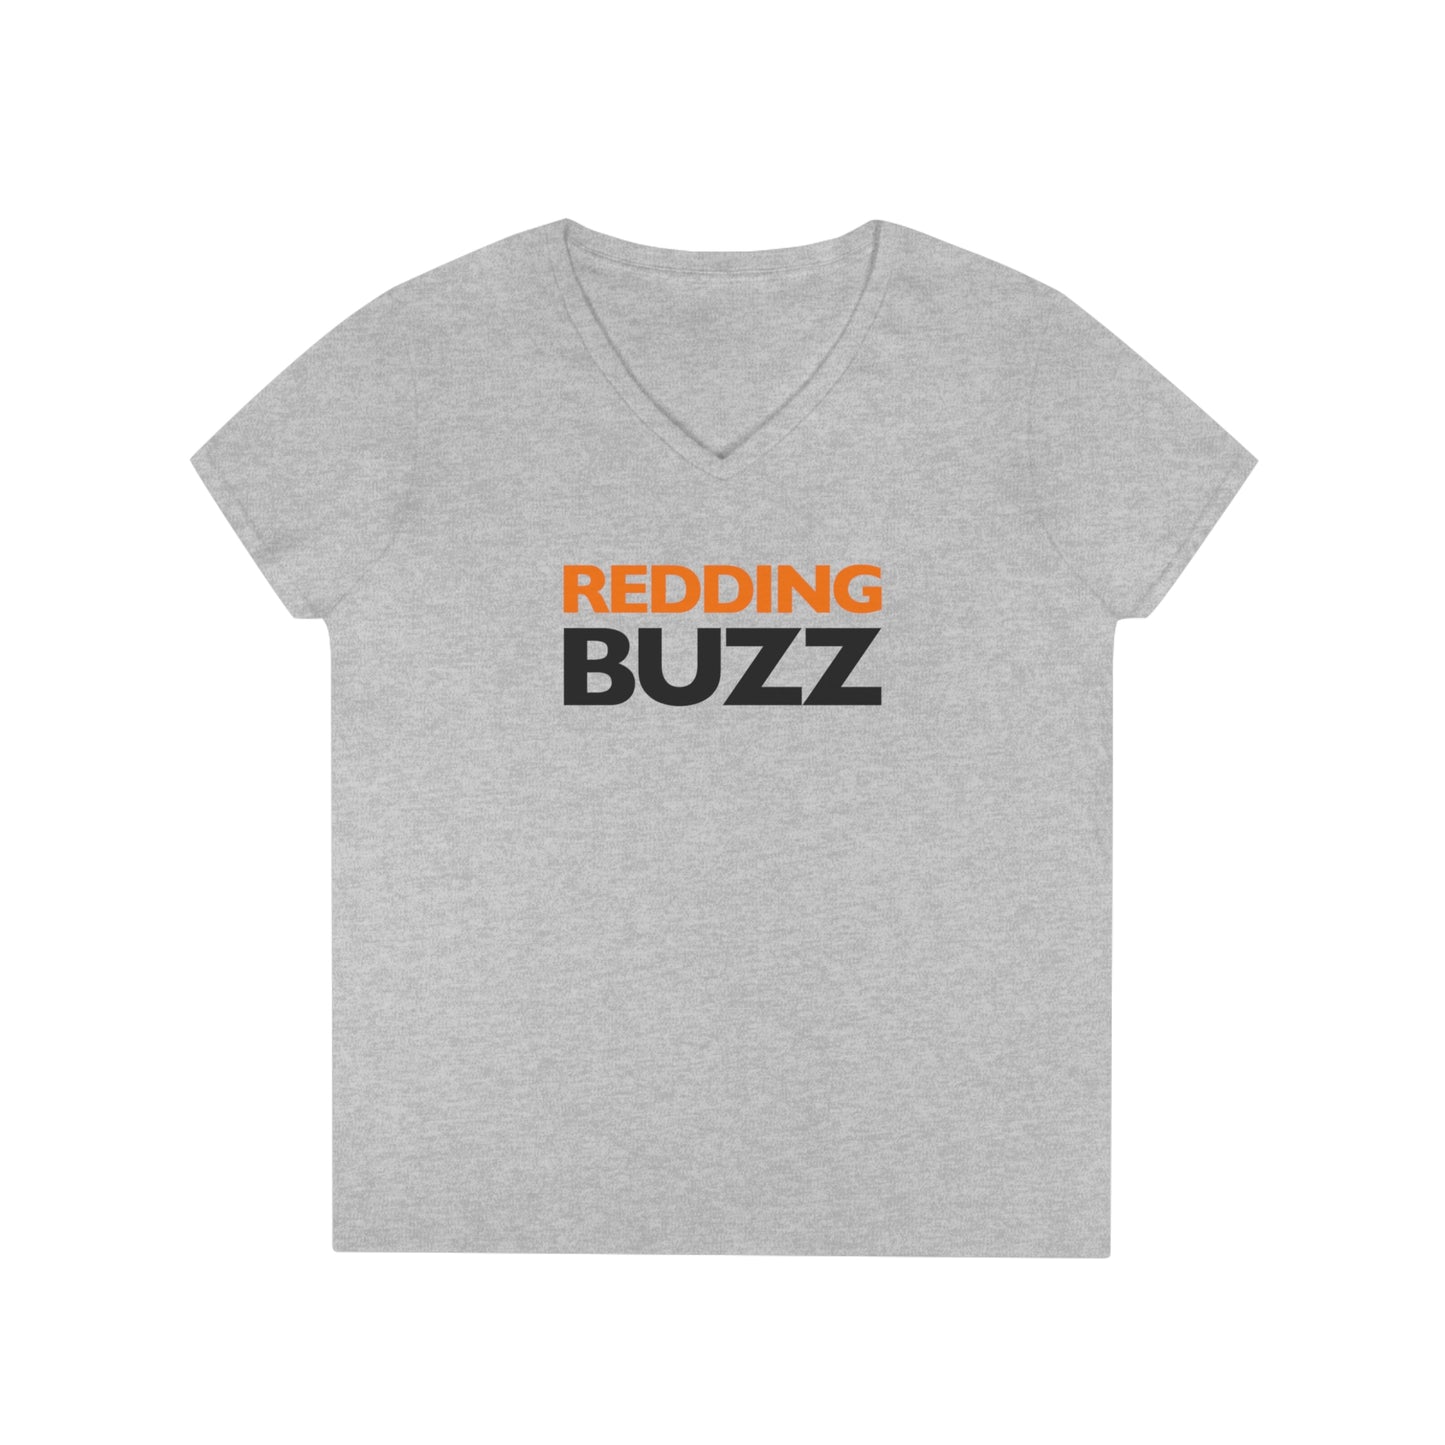 Buzz & Bloom V-Neck: Redding Buzz Women's Tee